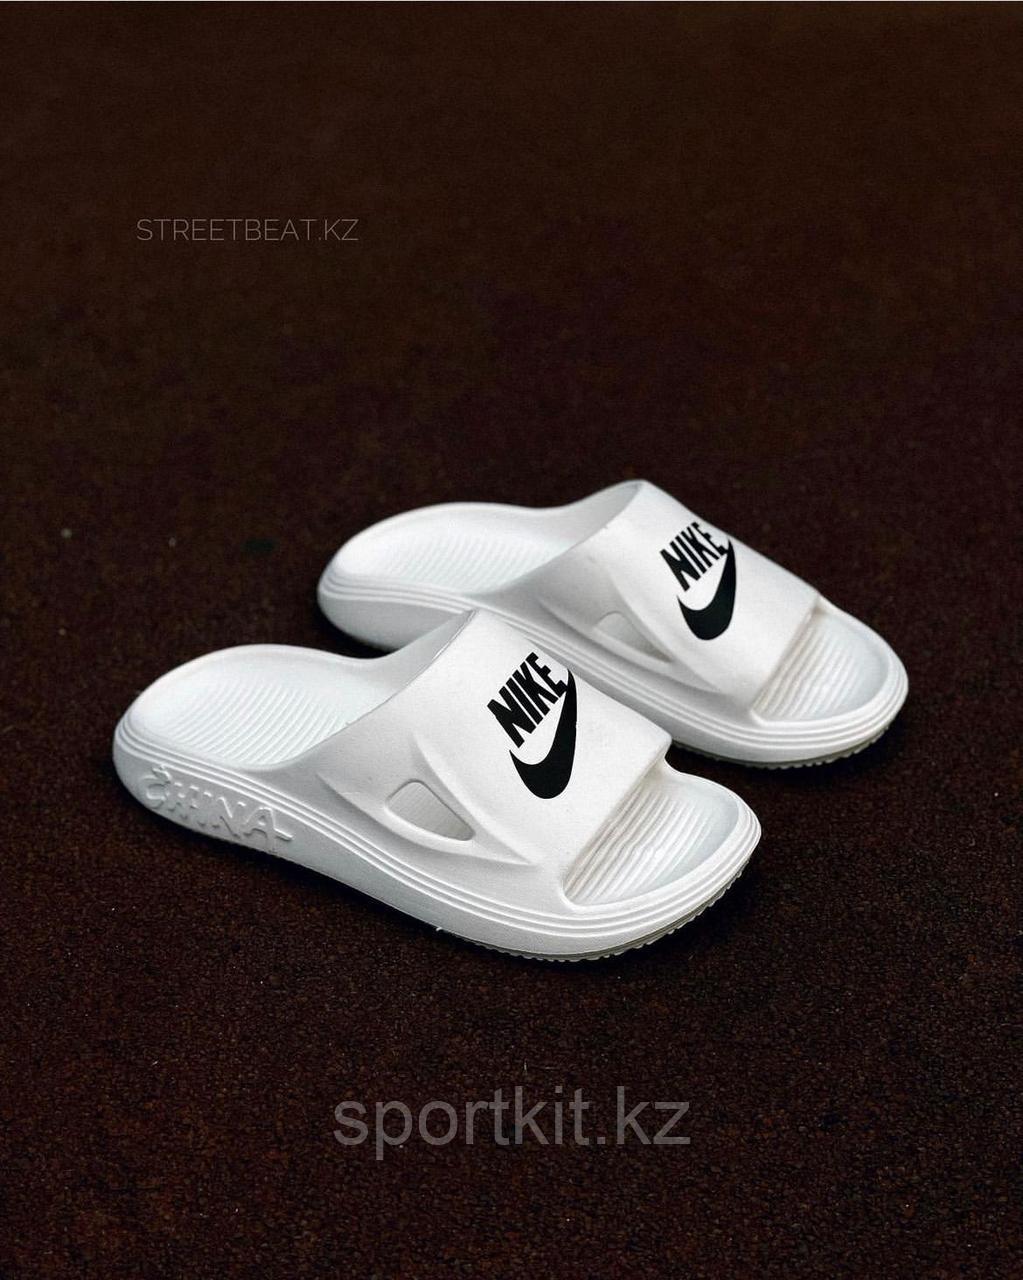 Шлепки Nike бел чер над